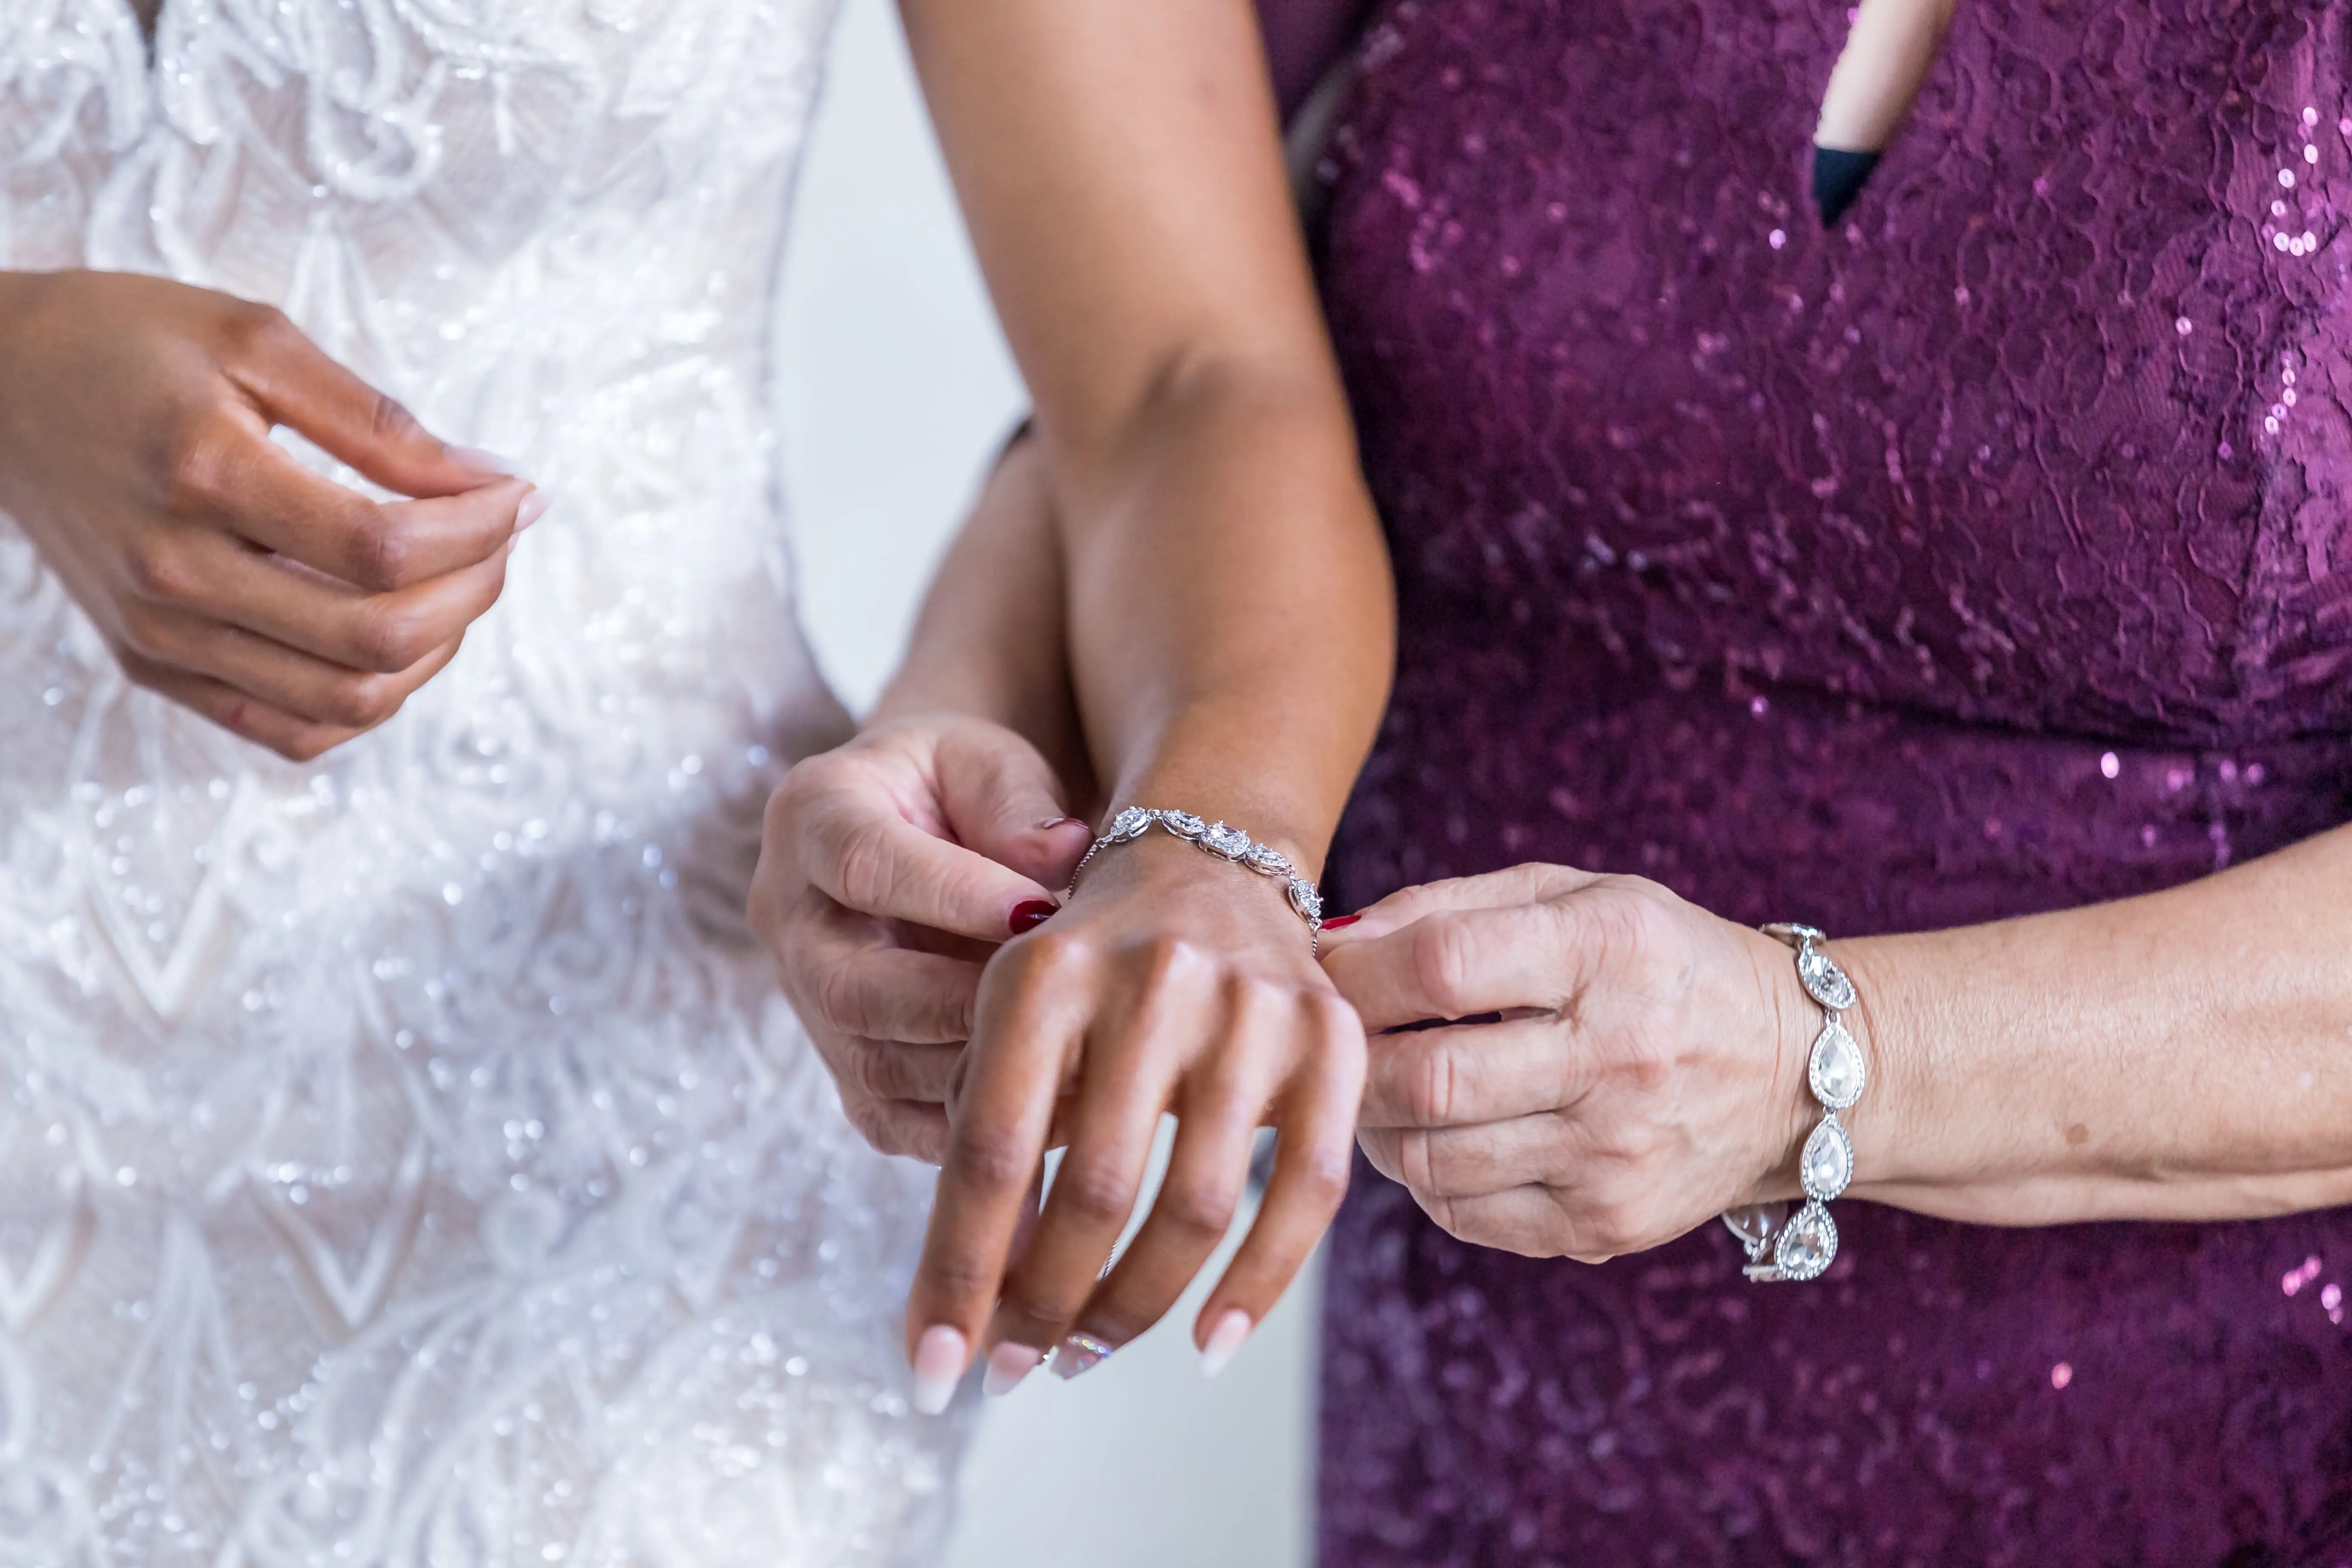 Mom clasps the bride's wedding bracelet